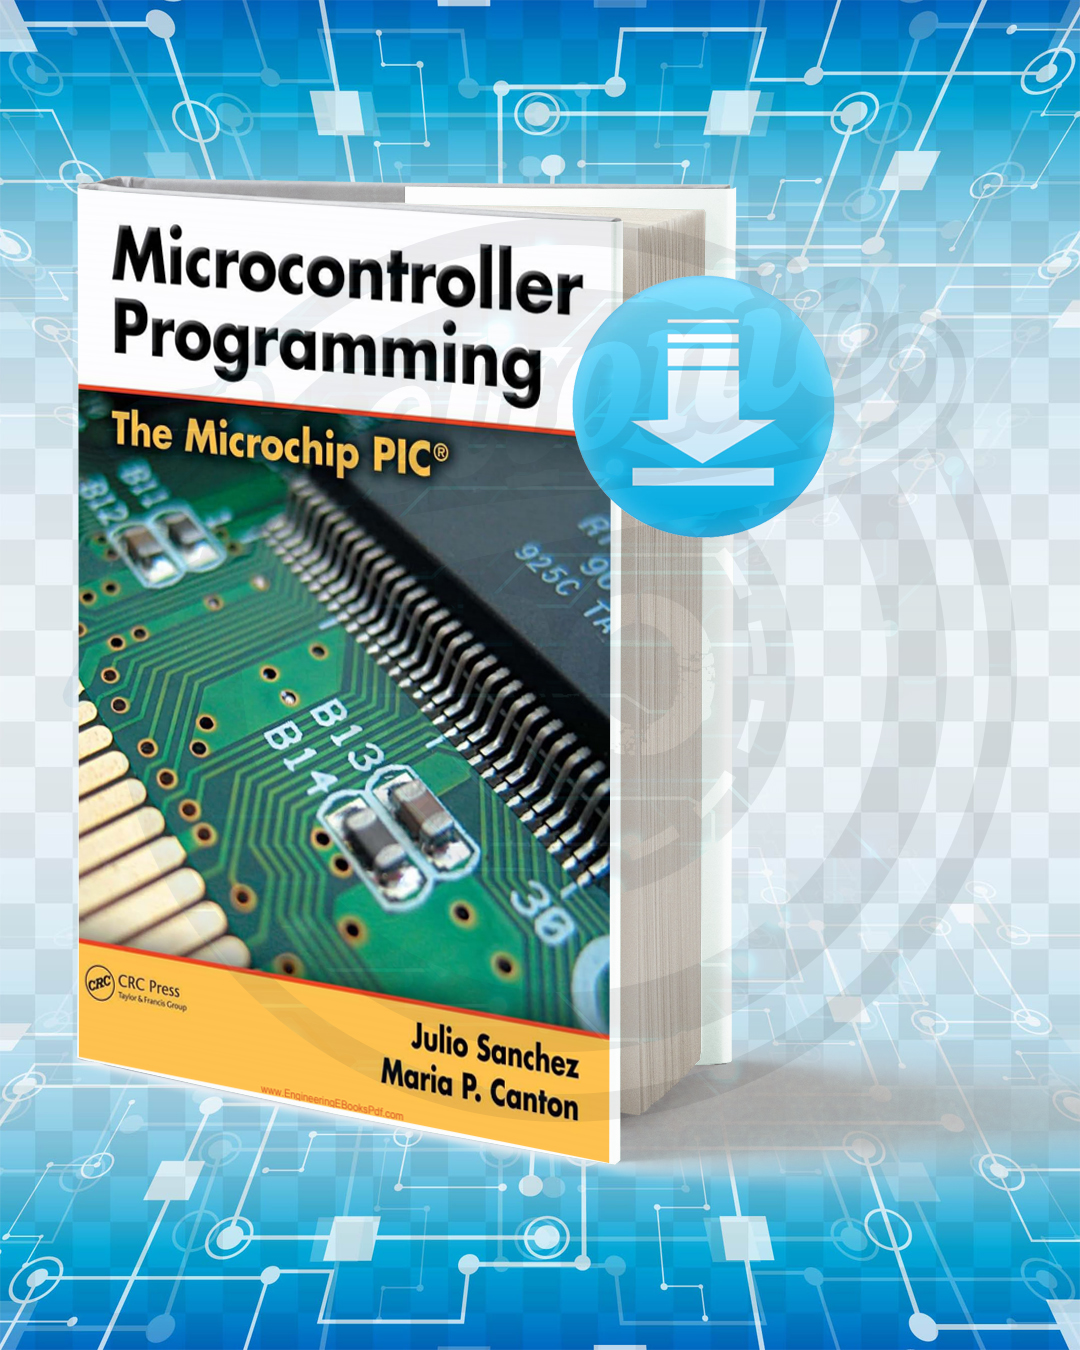 microcontroller programming software free download